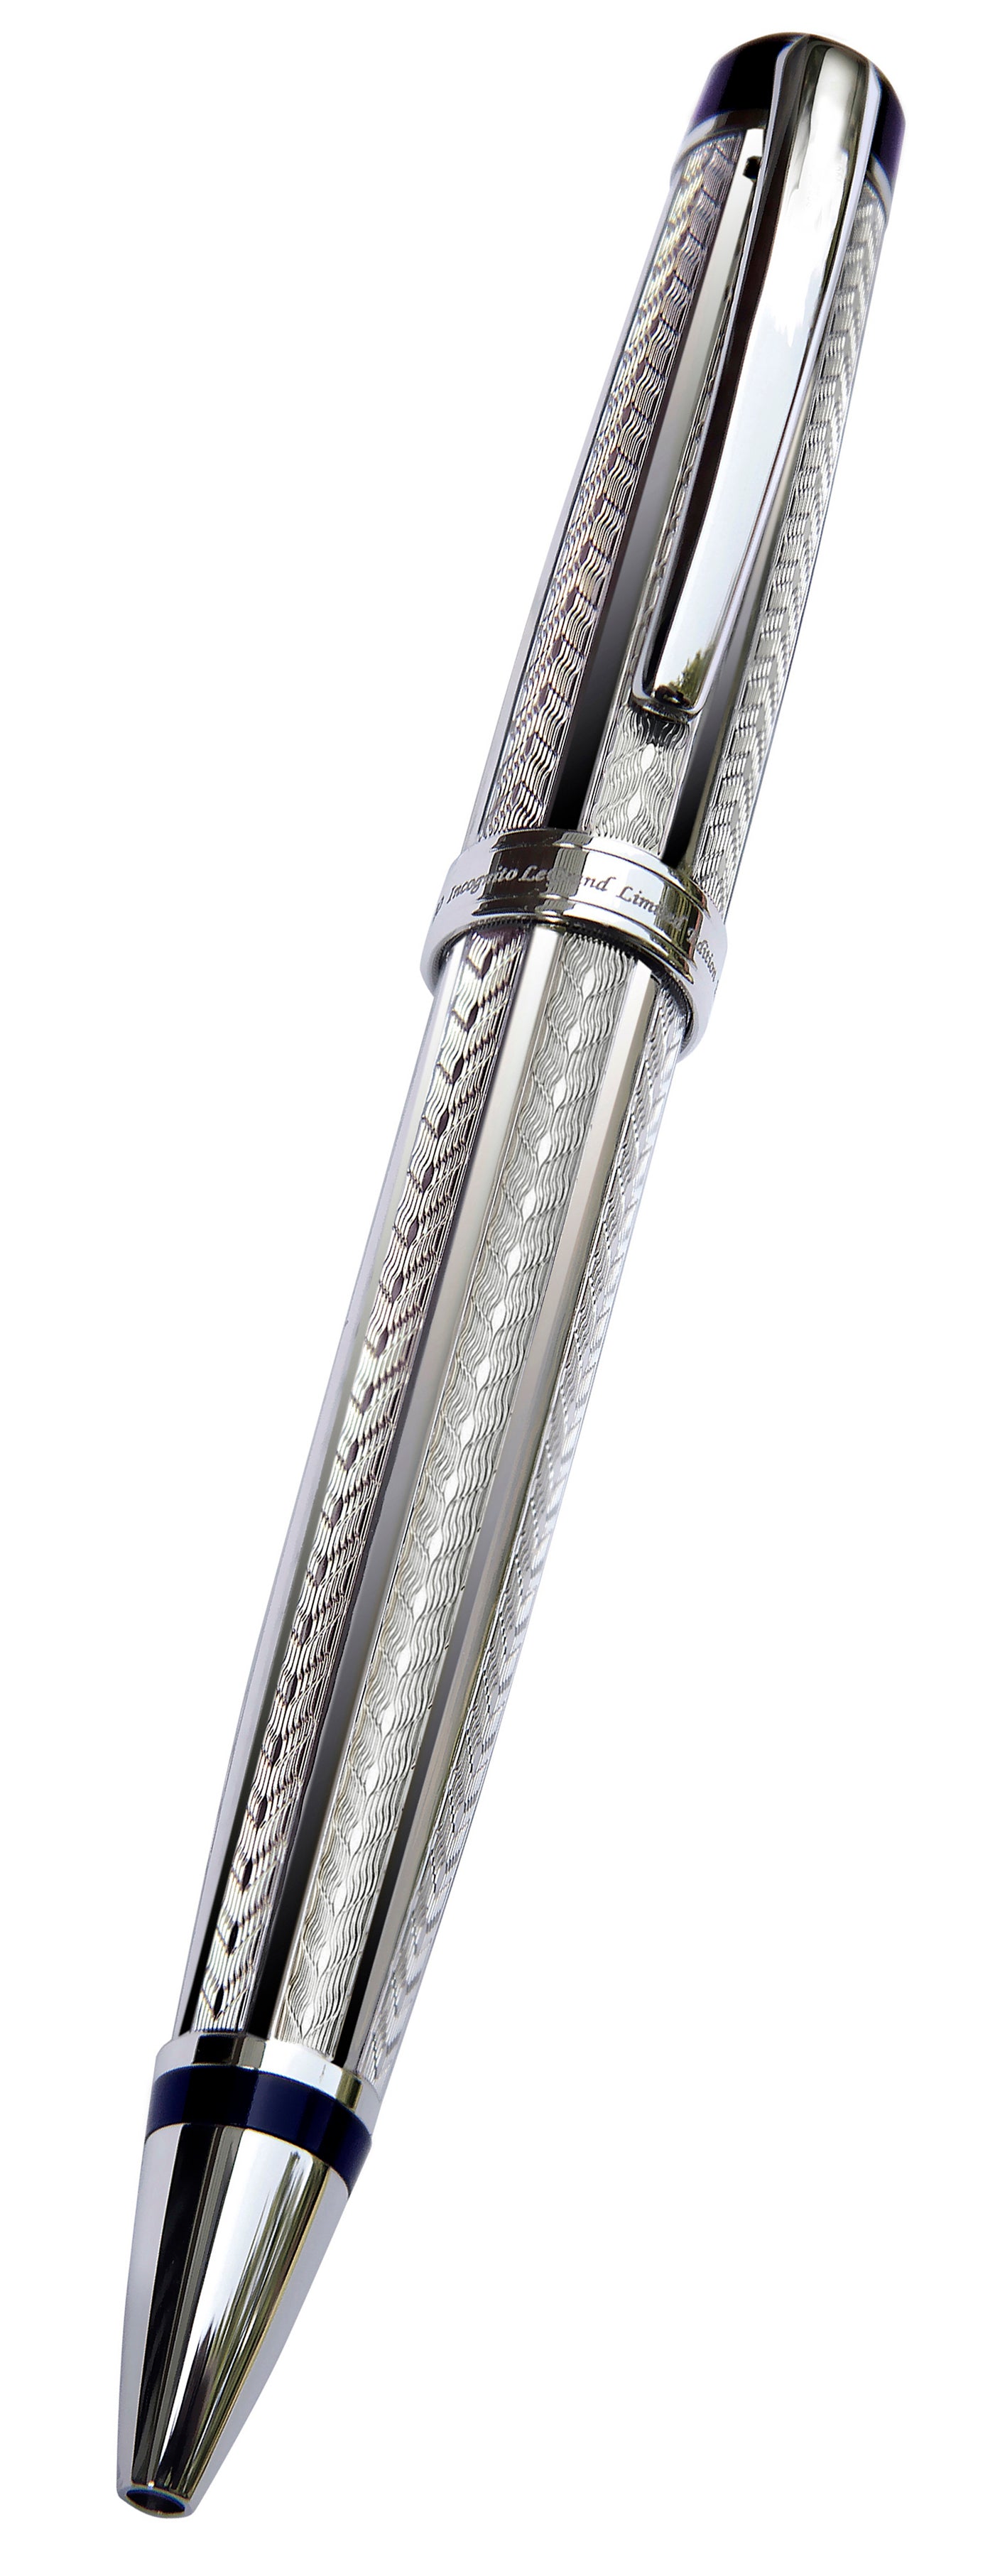 Xezo - Front view of the Incognito LeGrand Platinum B ballpoint pen